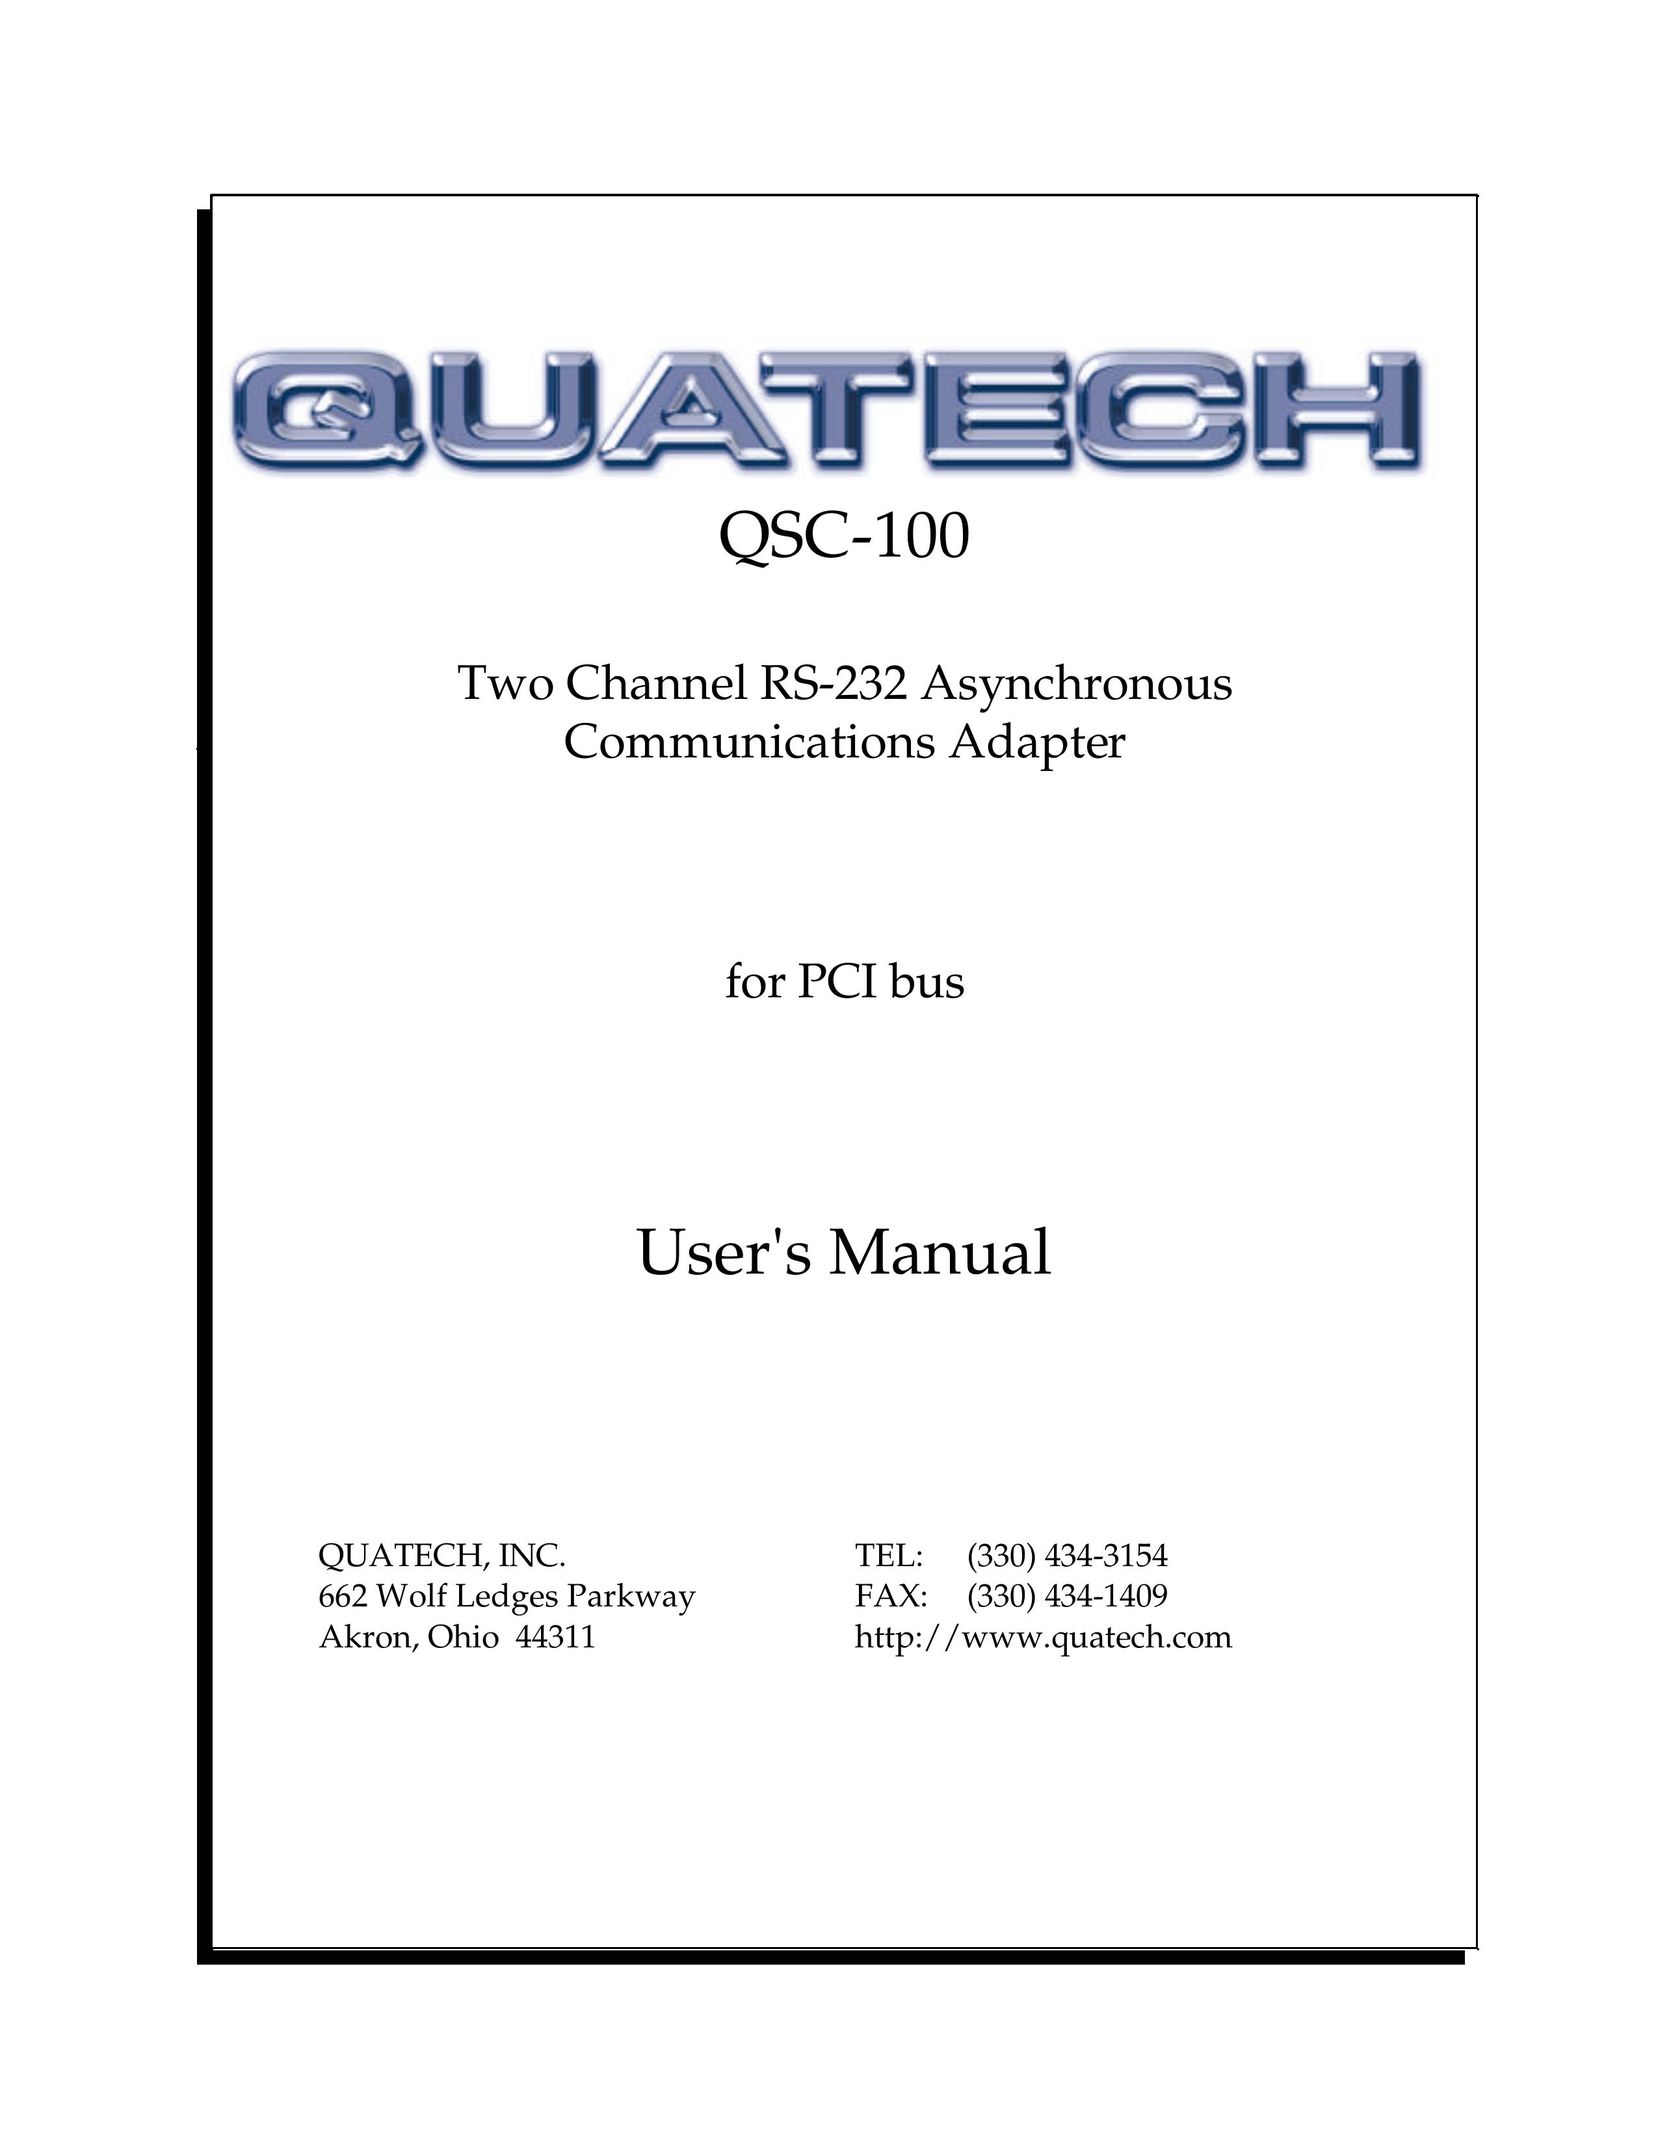 Quatech QSC-100 Network Card User Manual